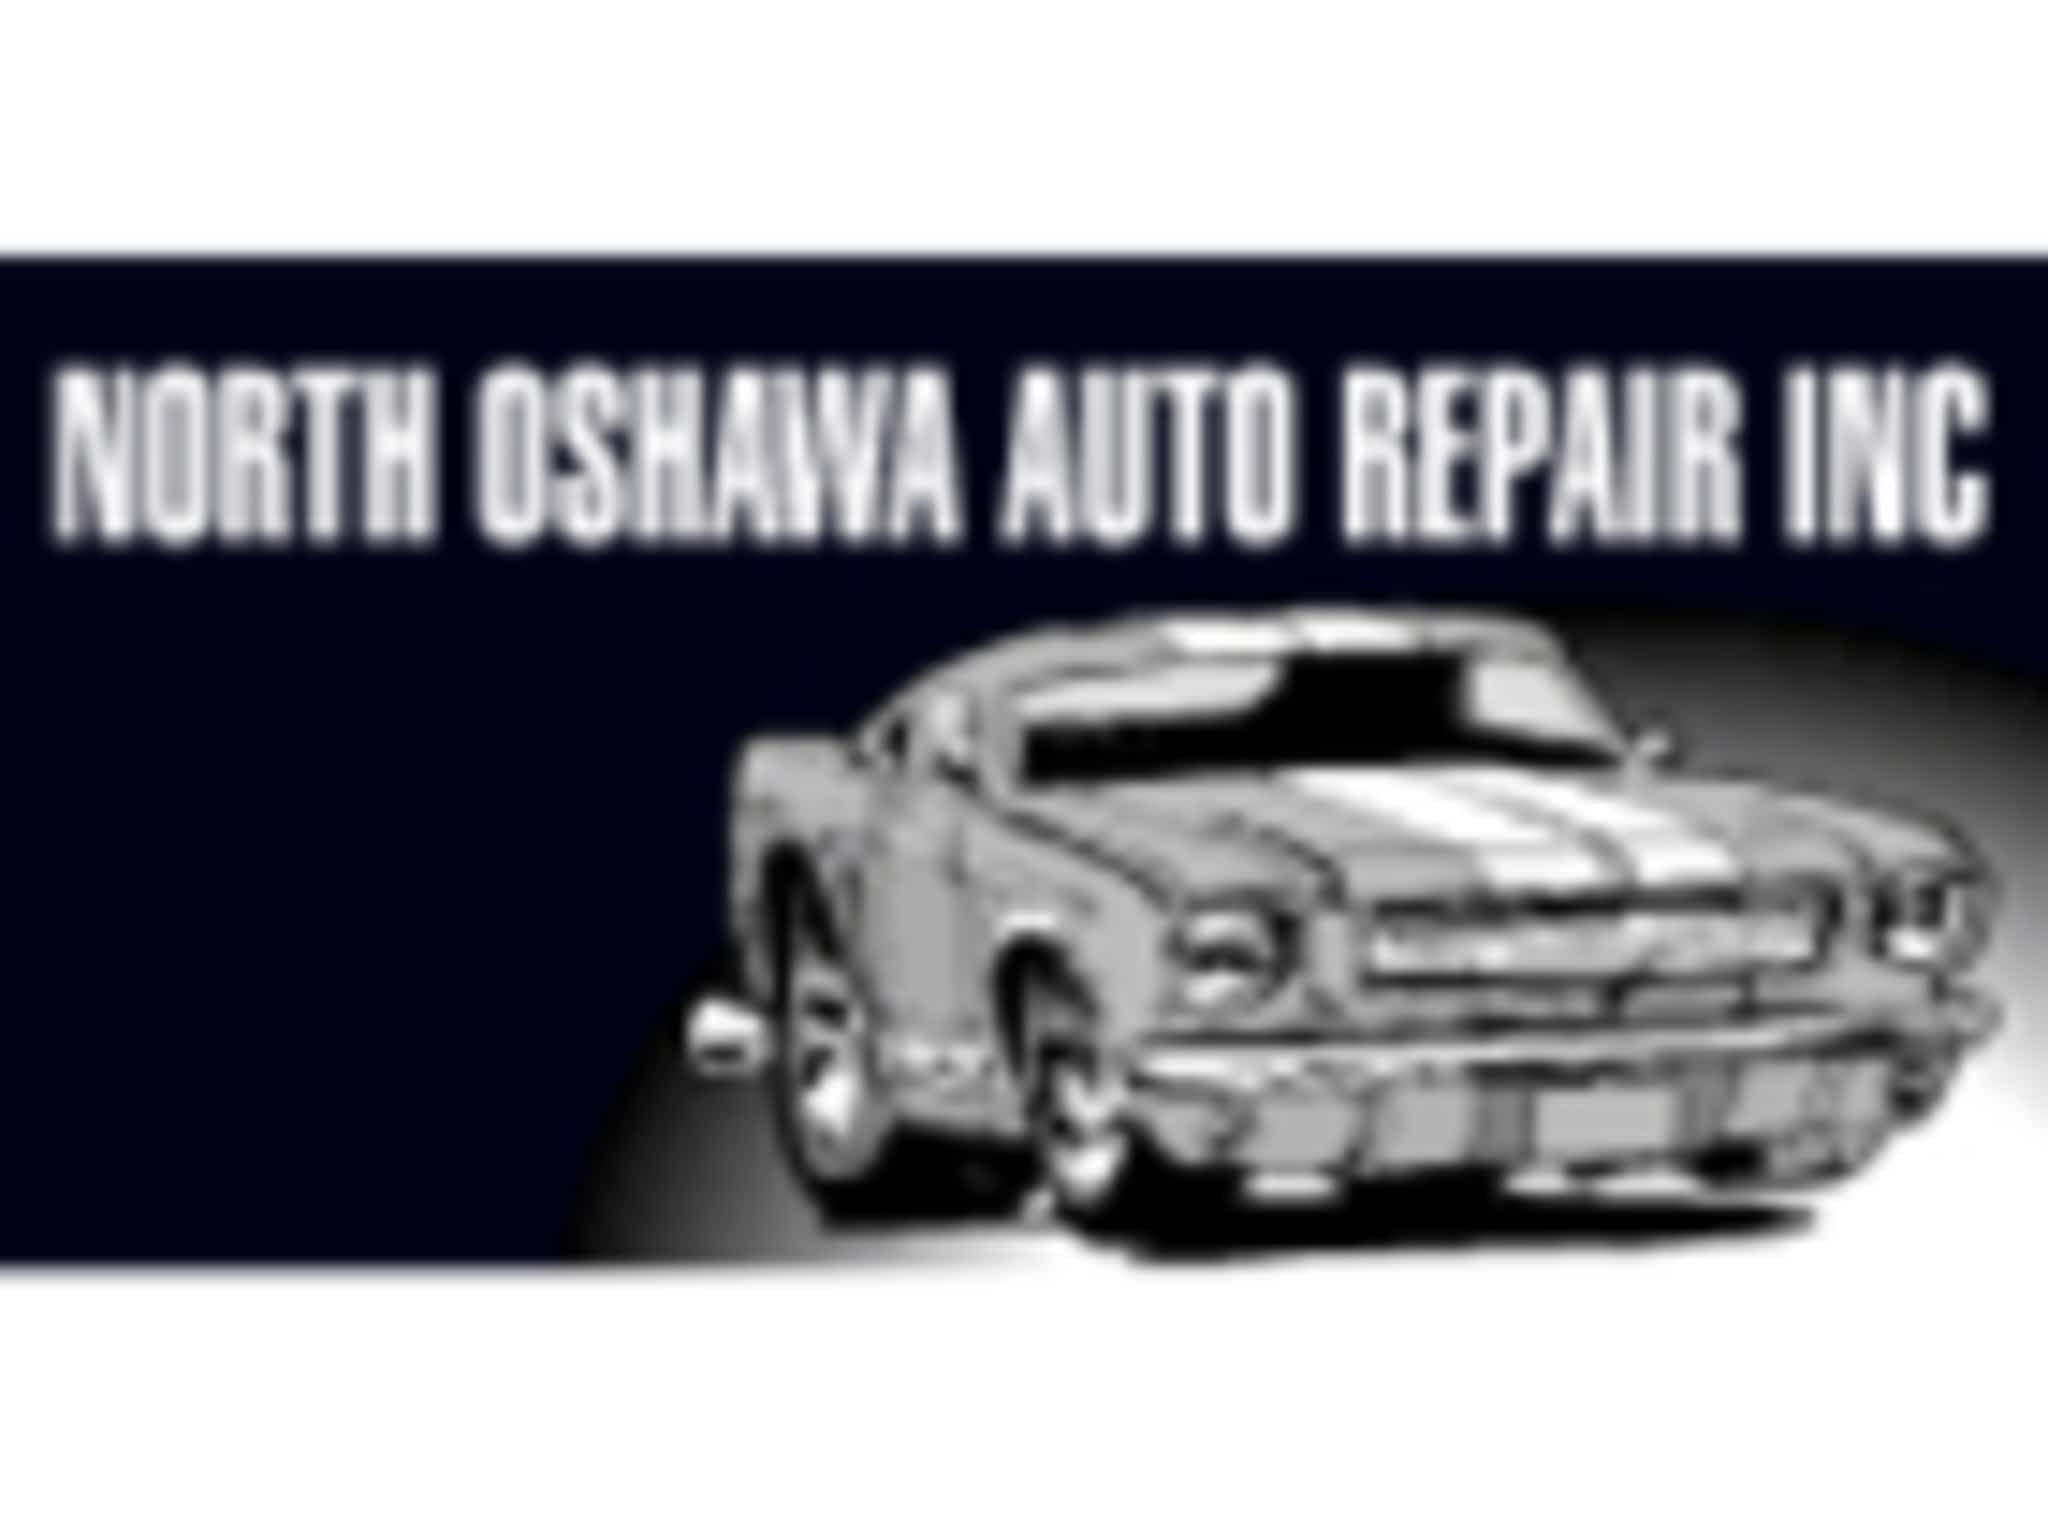 photo North Oshawa Auto Repair Inc